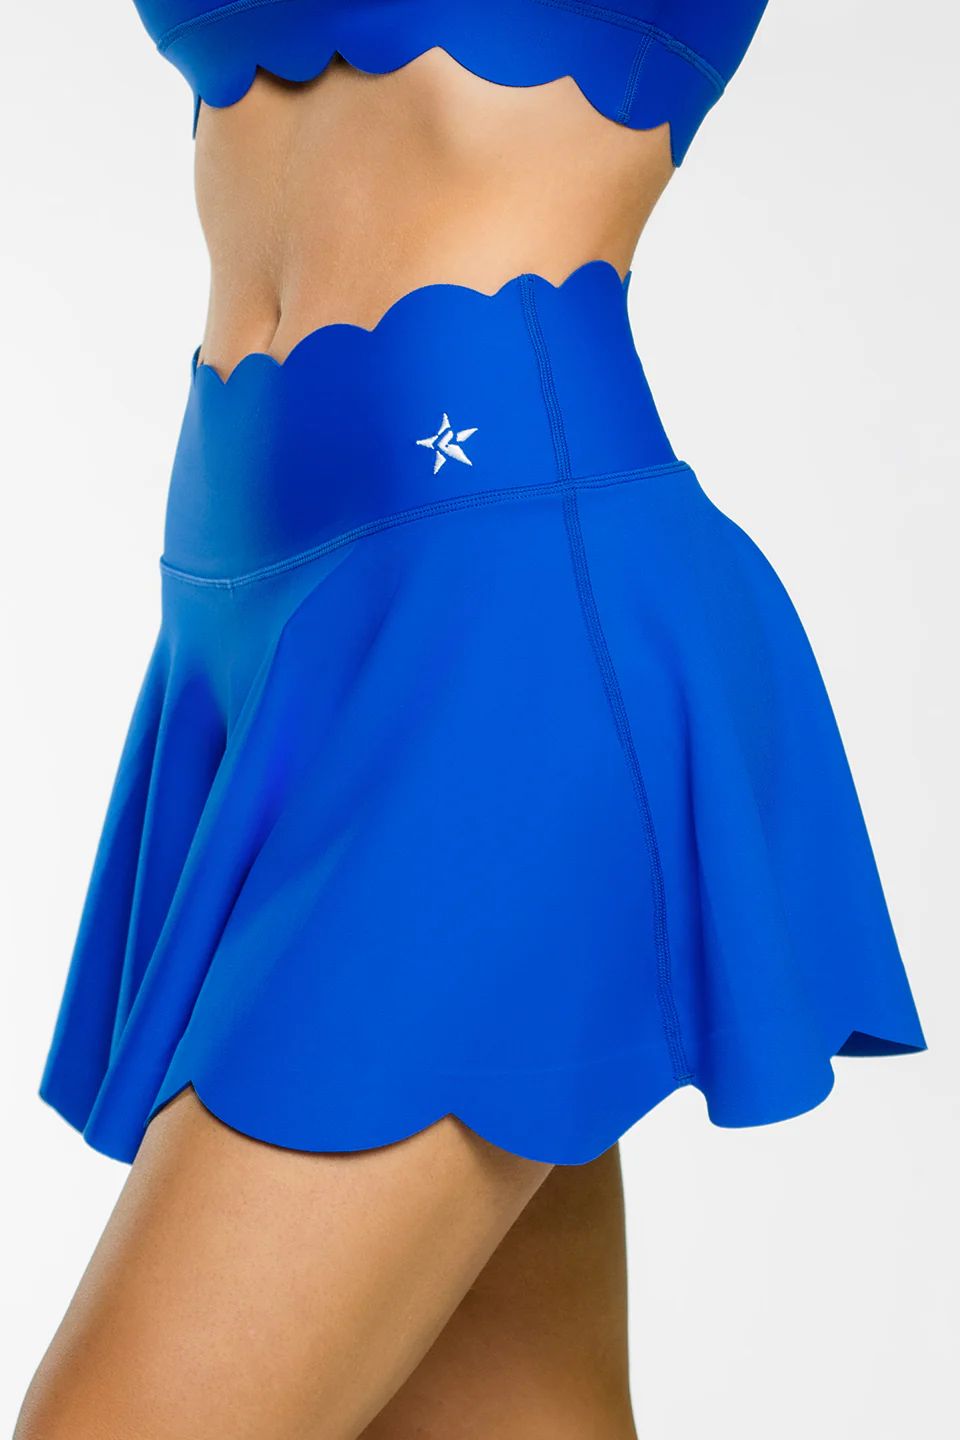 Scalloped Flouncy Skirt in Royal Blue | Rebel Athletic